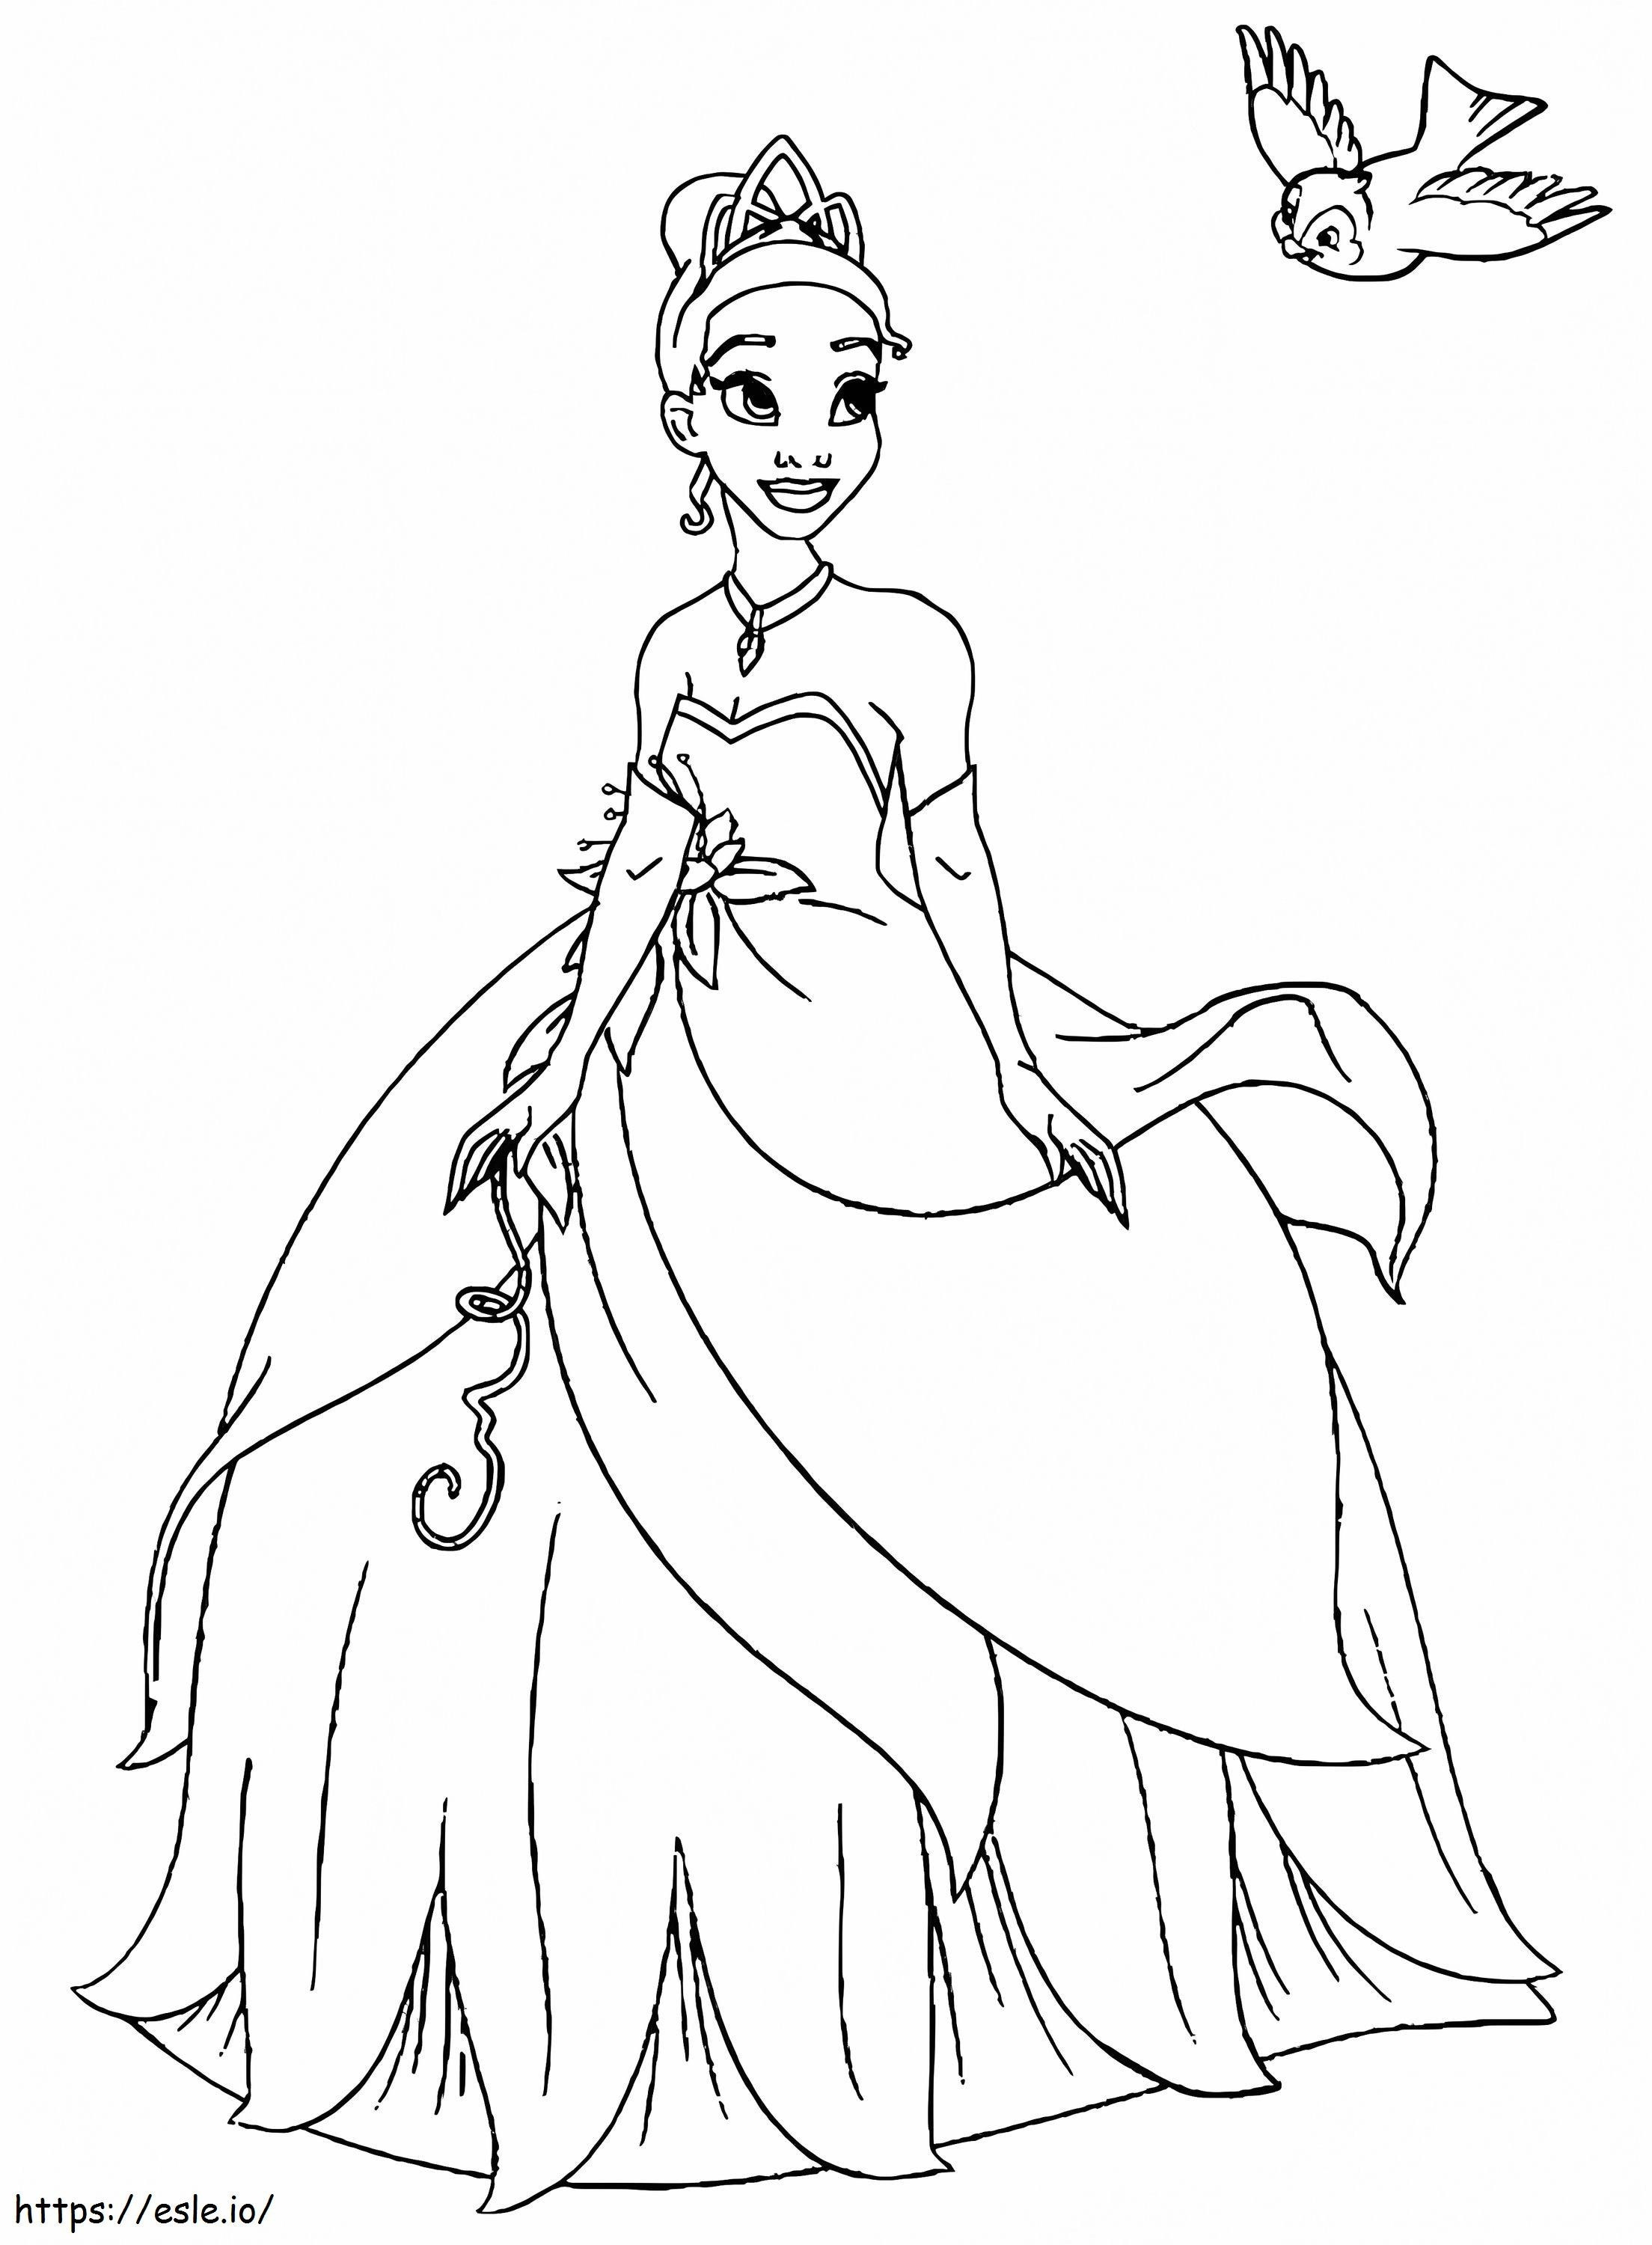 Princess Tiana And Bird coloring page